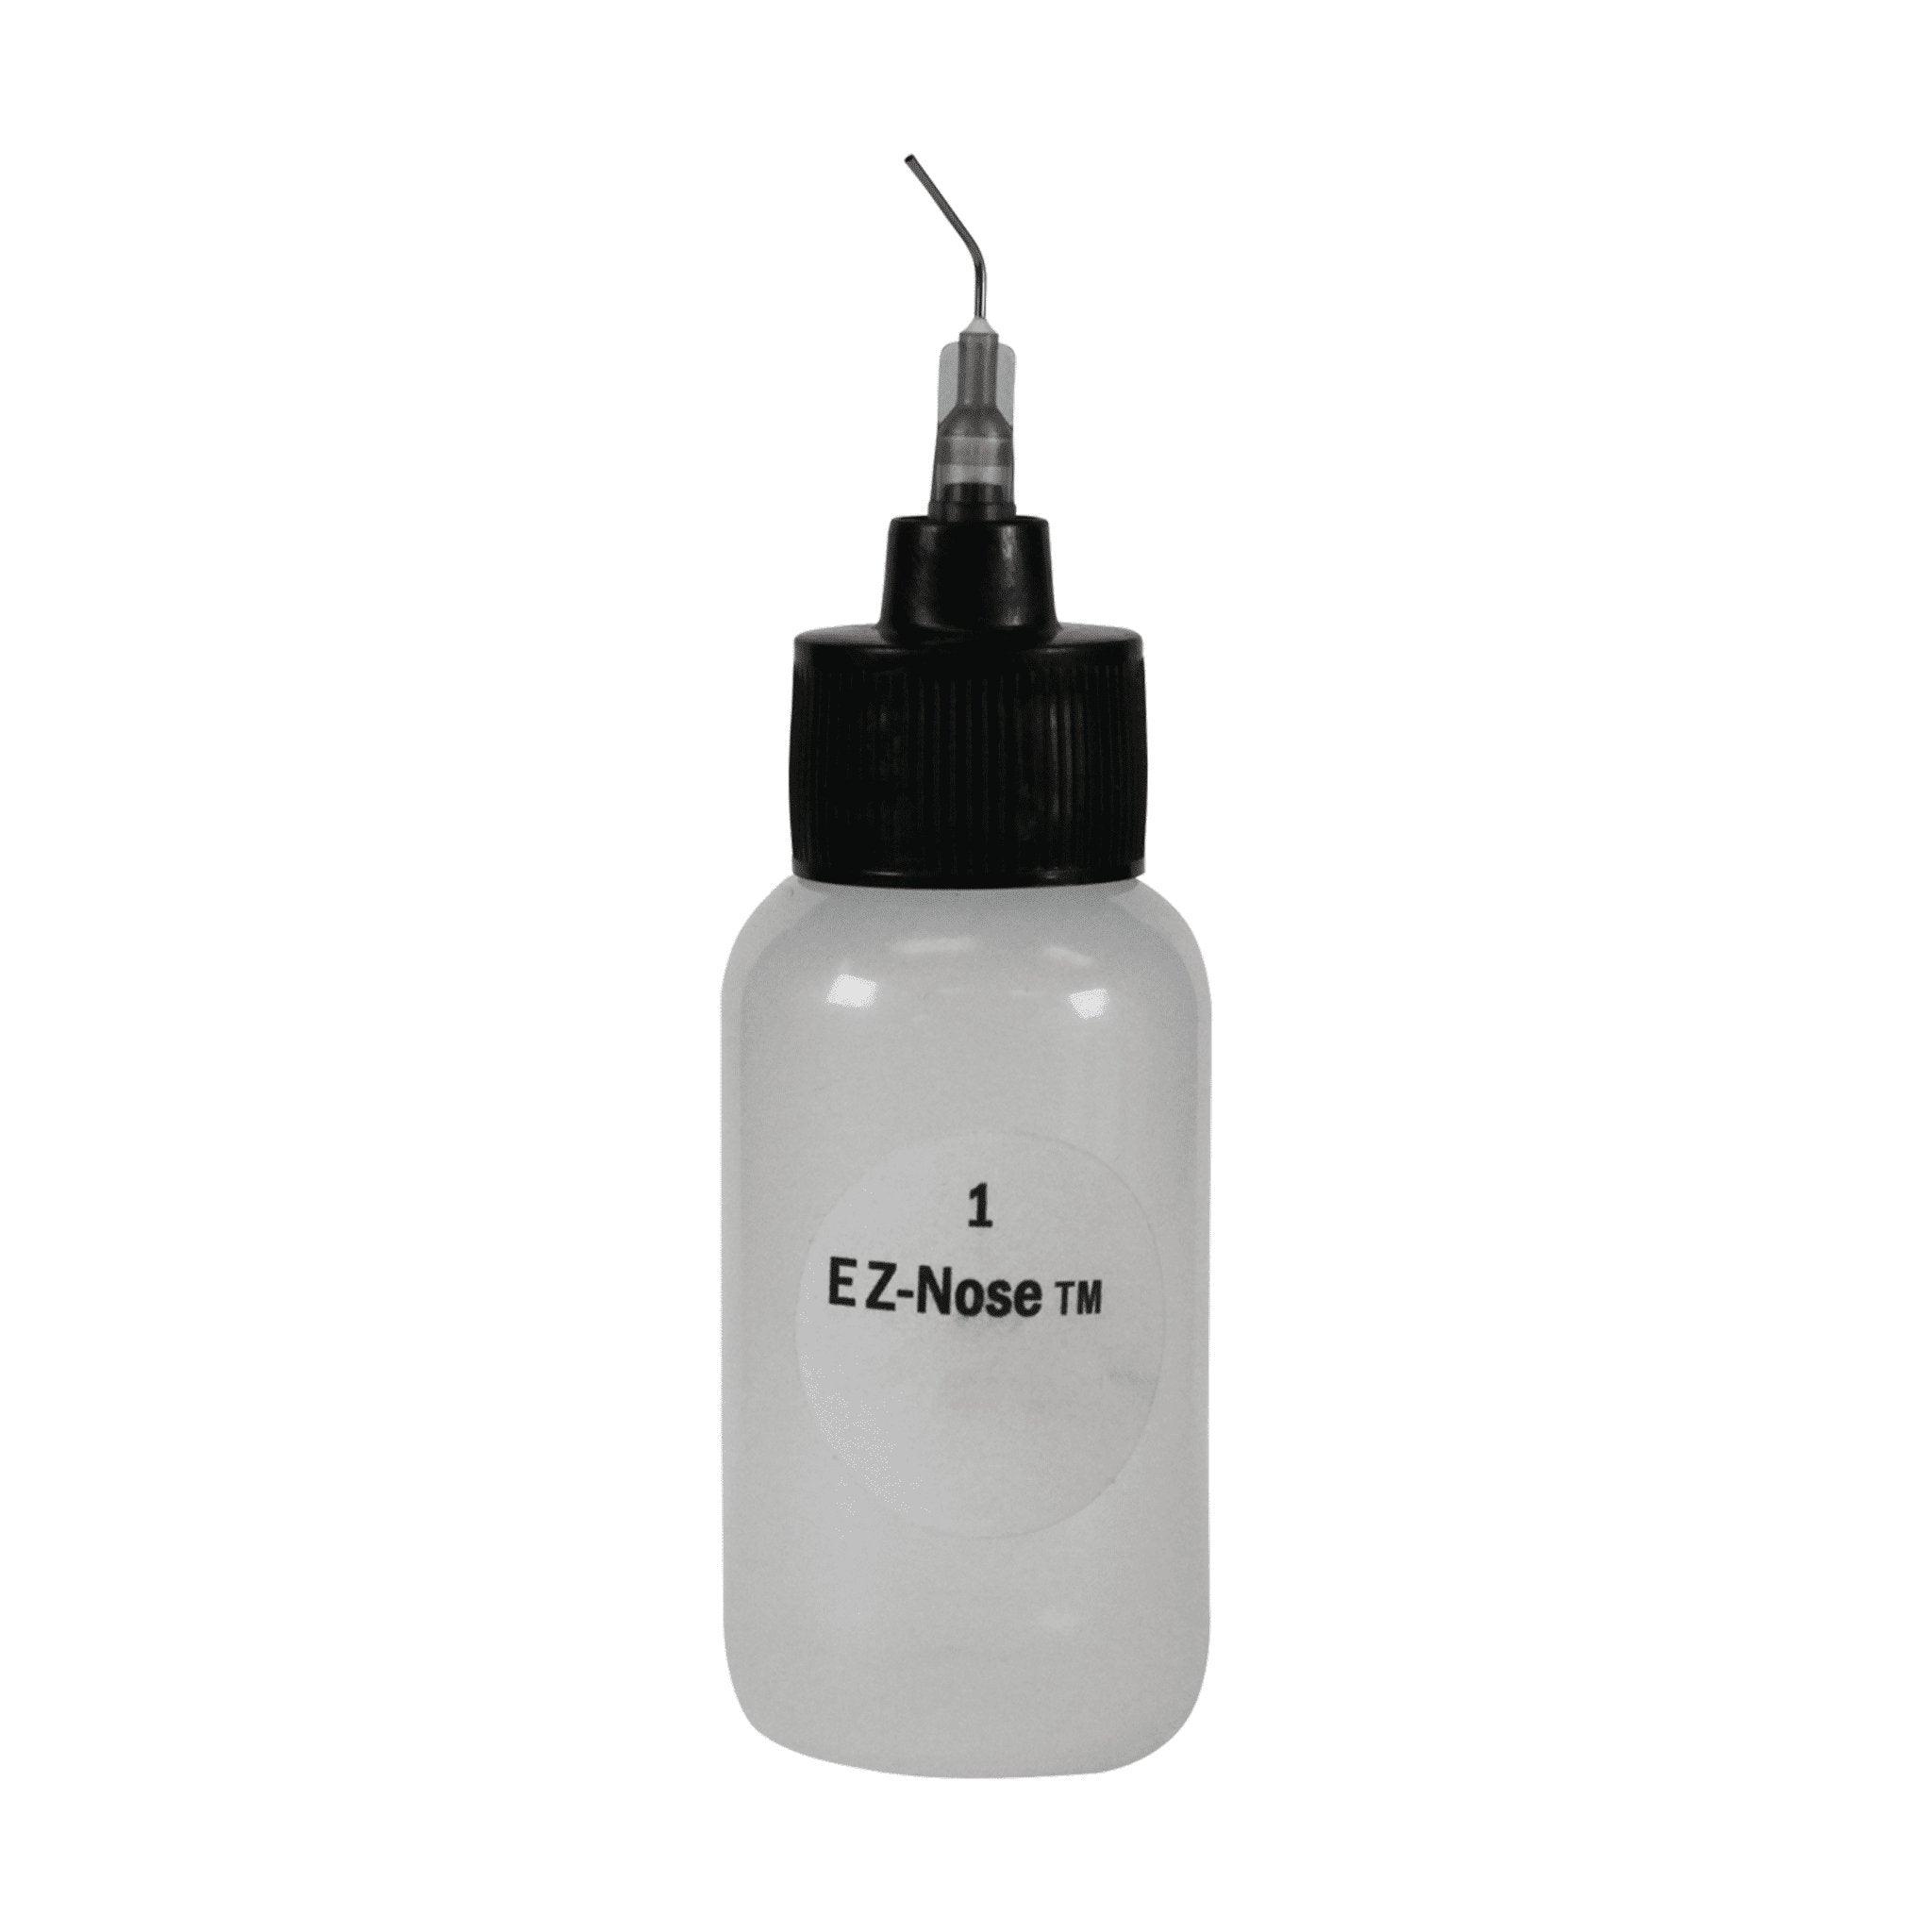 EZ-Nose Tips & Bottles - Matuska Taxidermy Supply Company